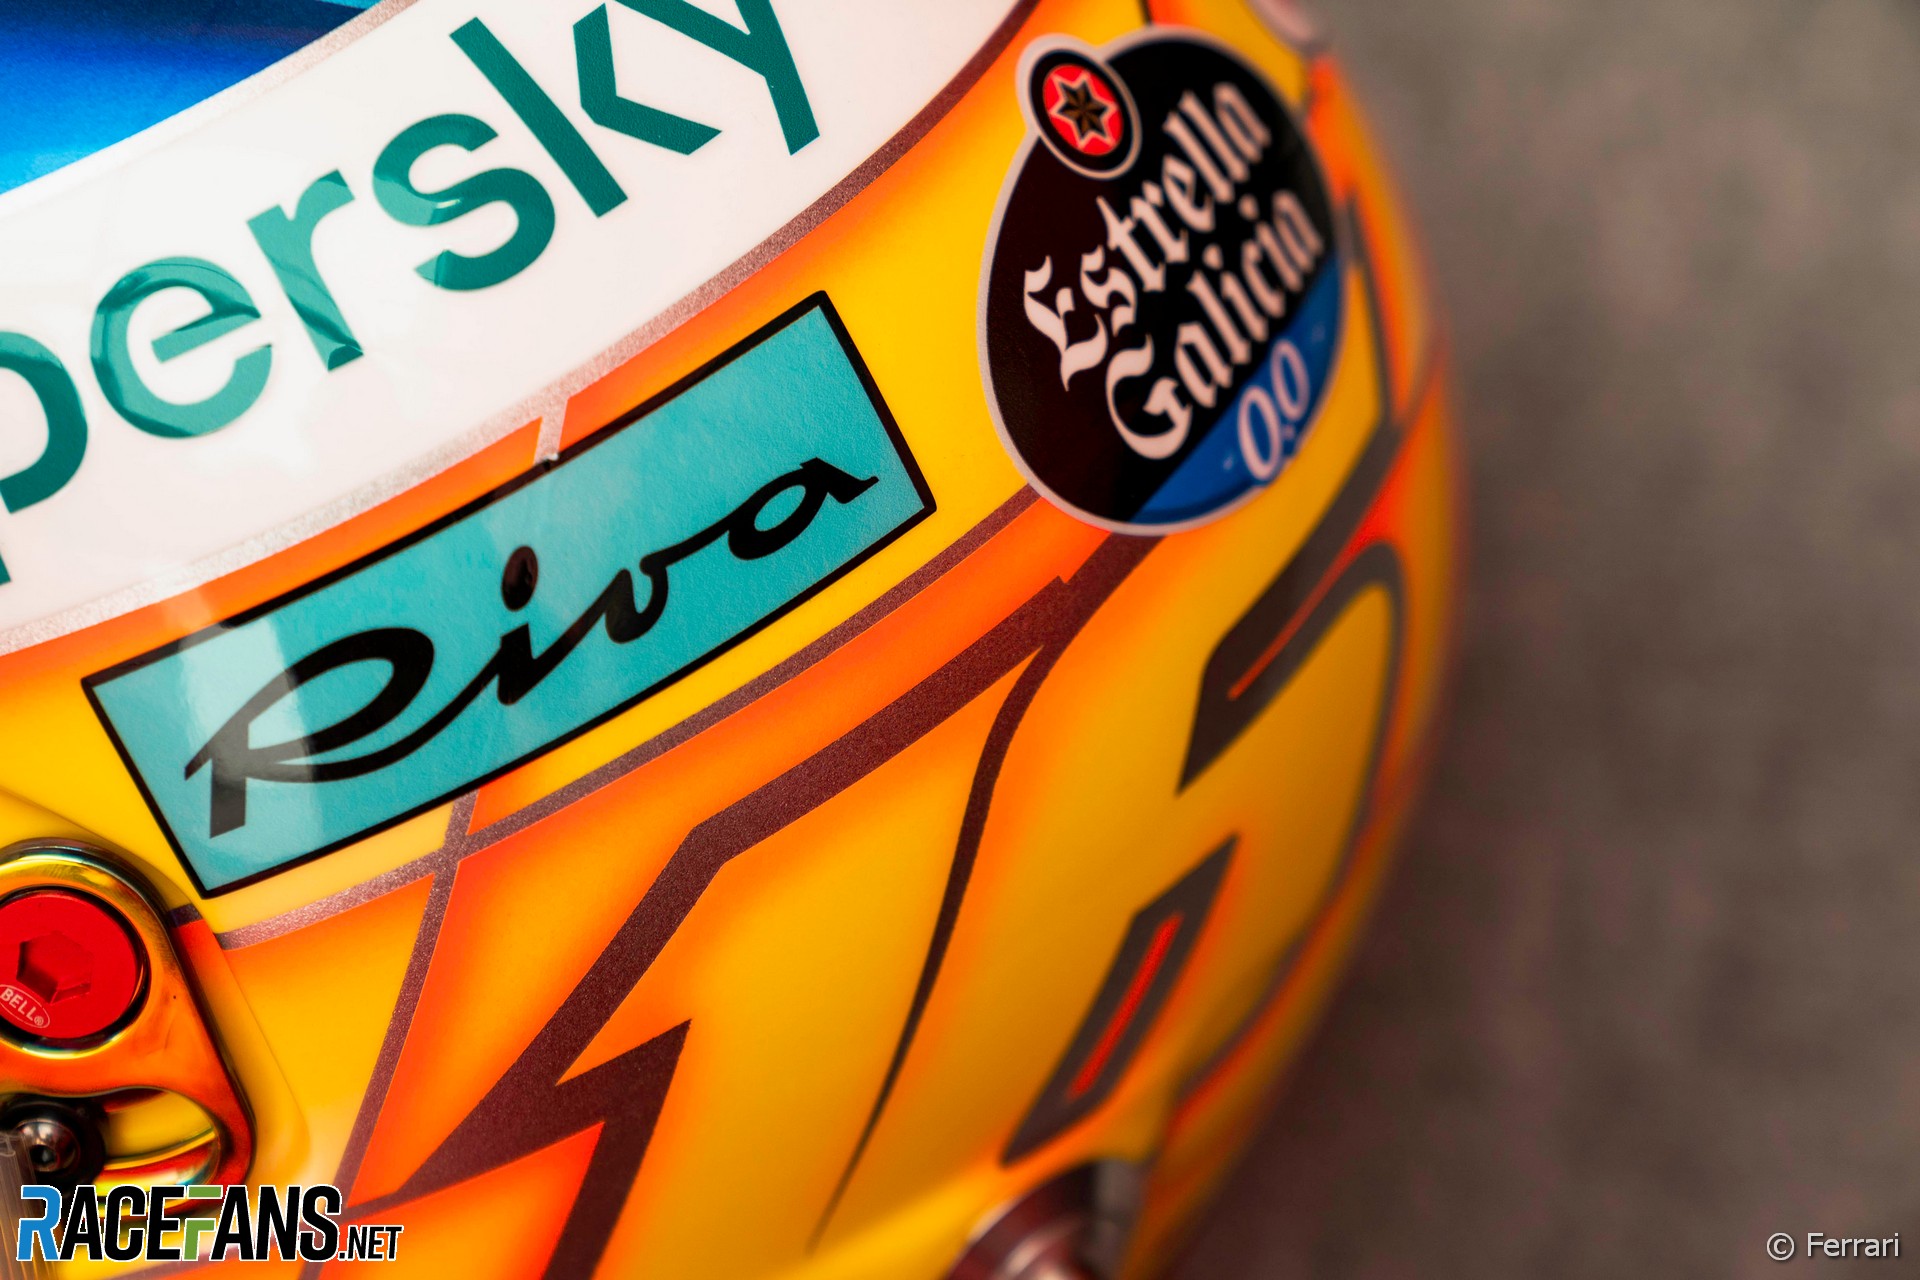 Charles Leclerc's 2021 French Grand Prix helmet